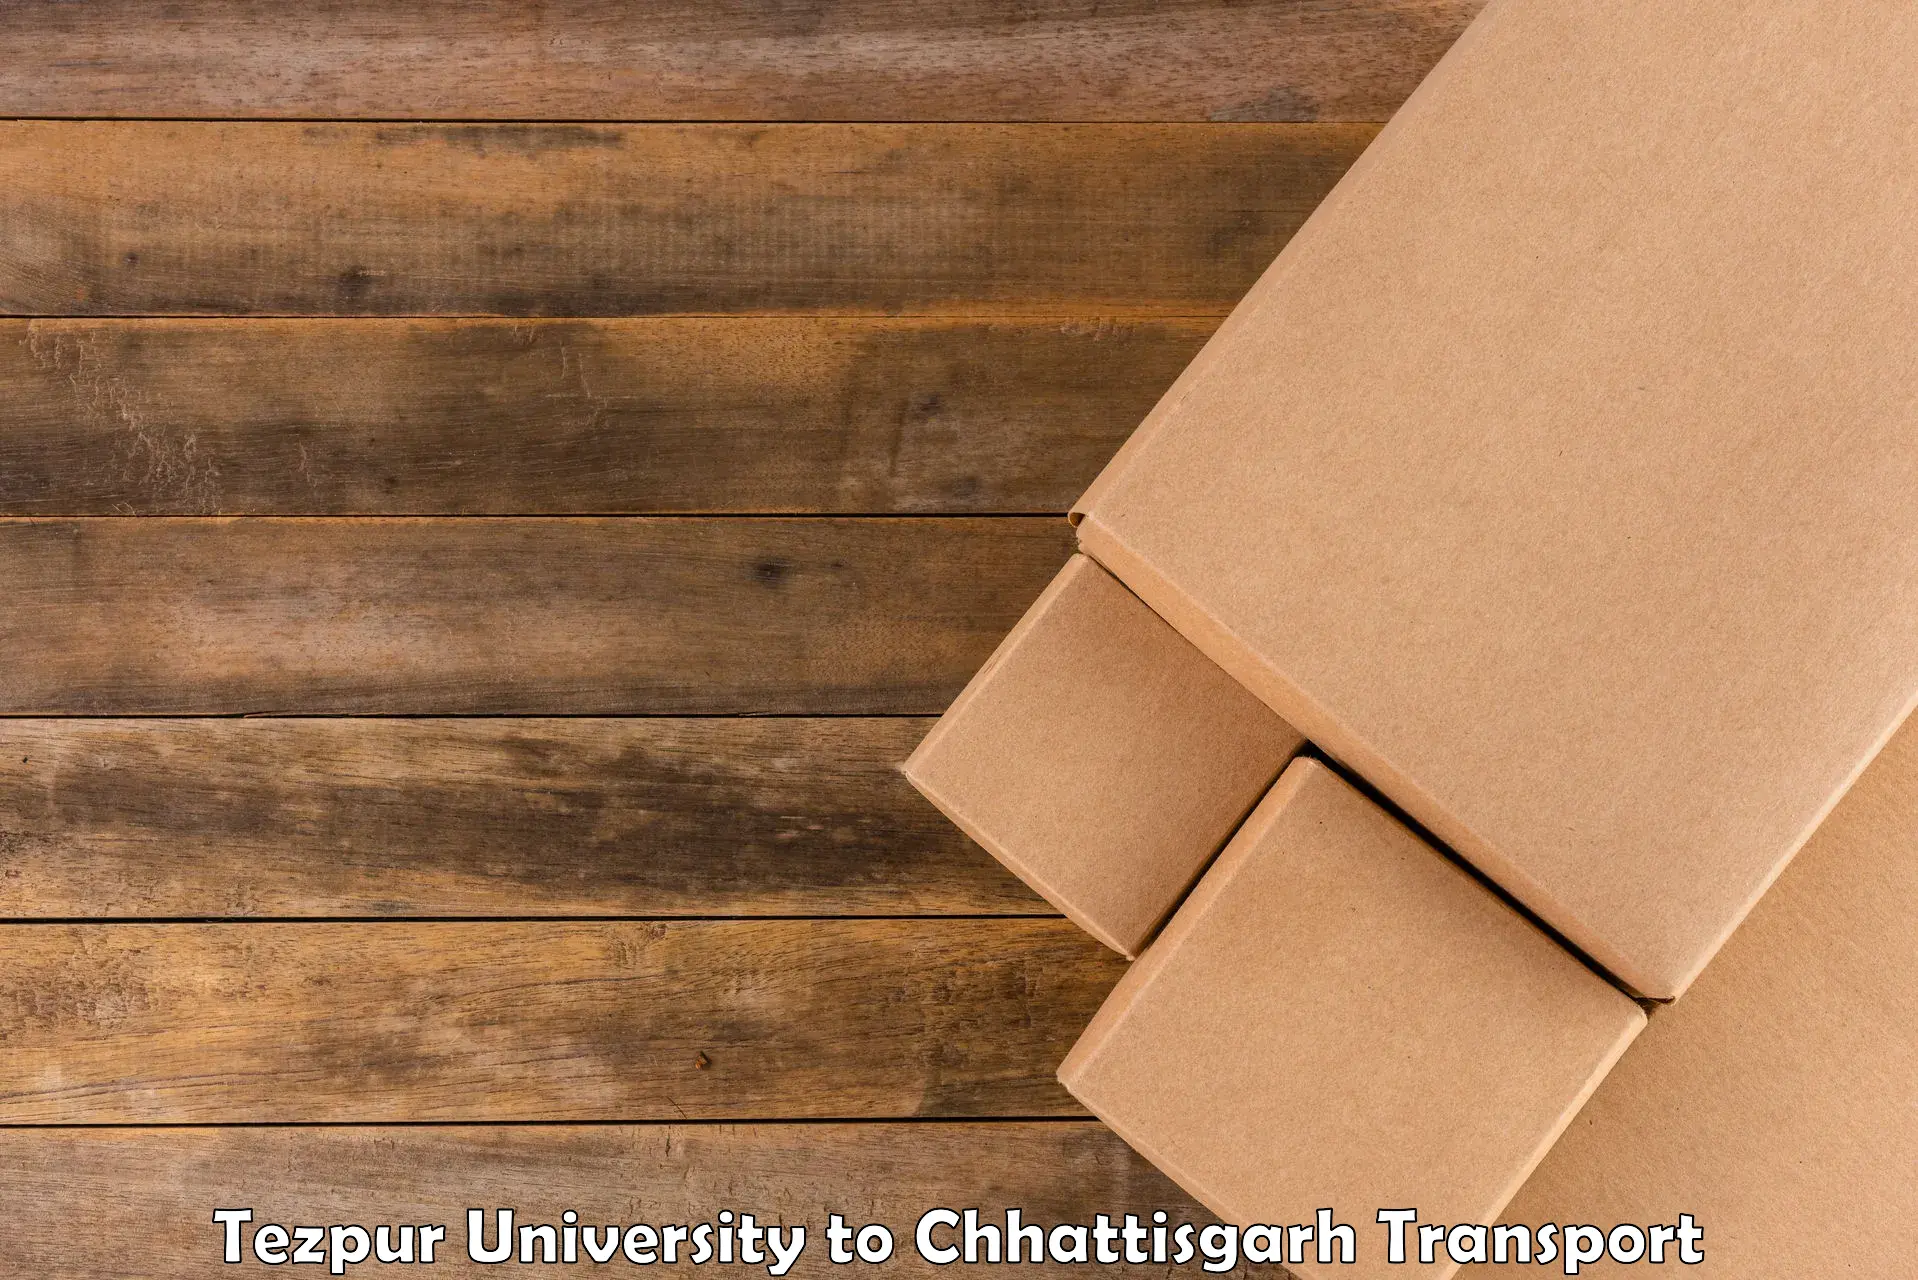 Truck transport companies in India Tezpur University to Raigarh